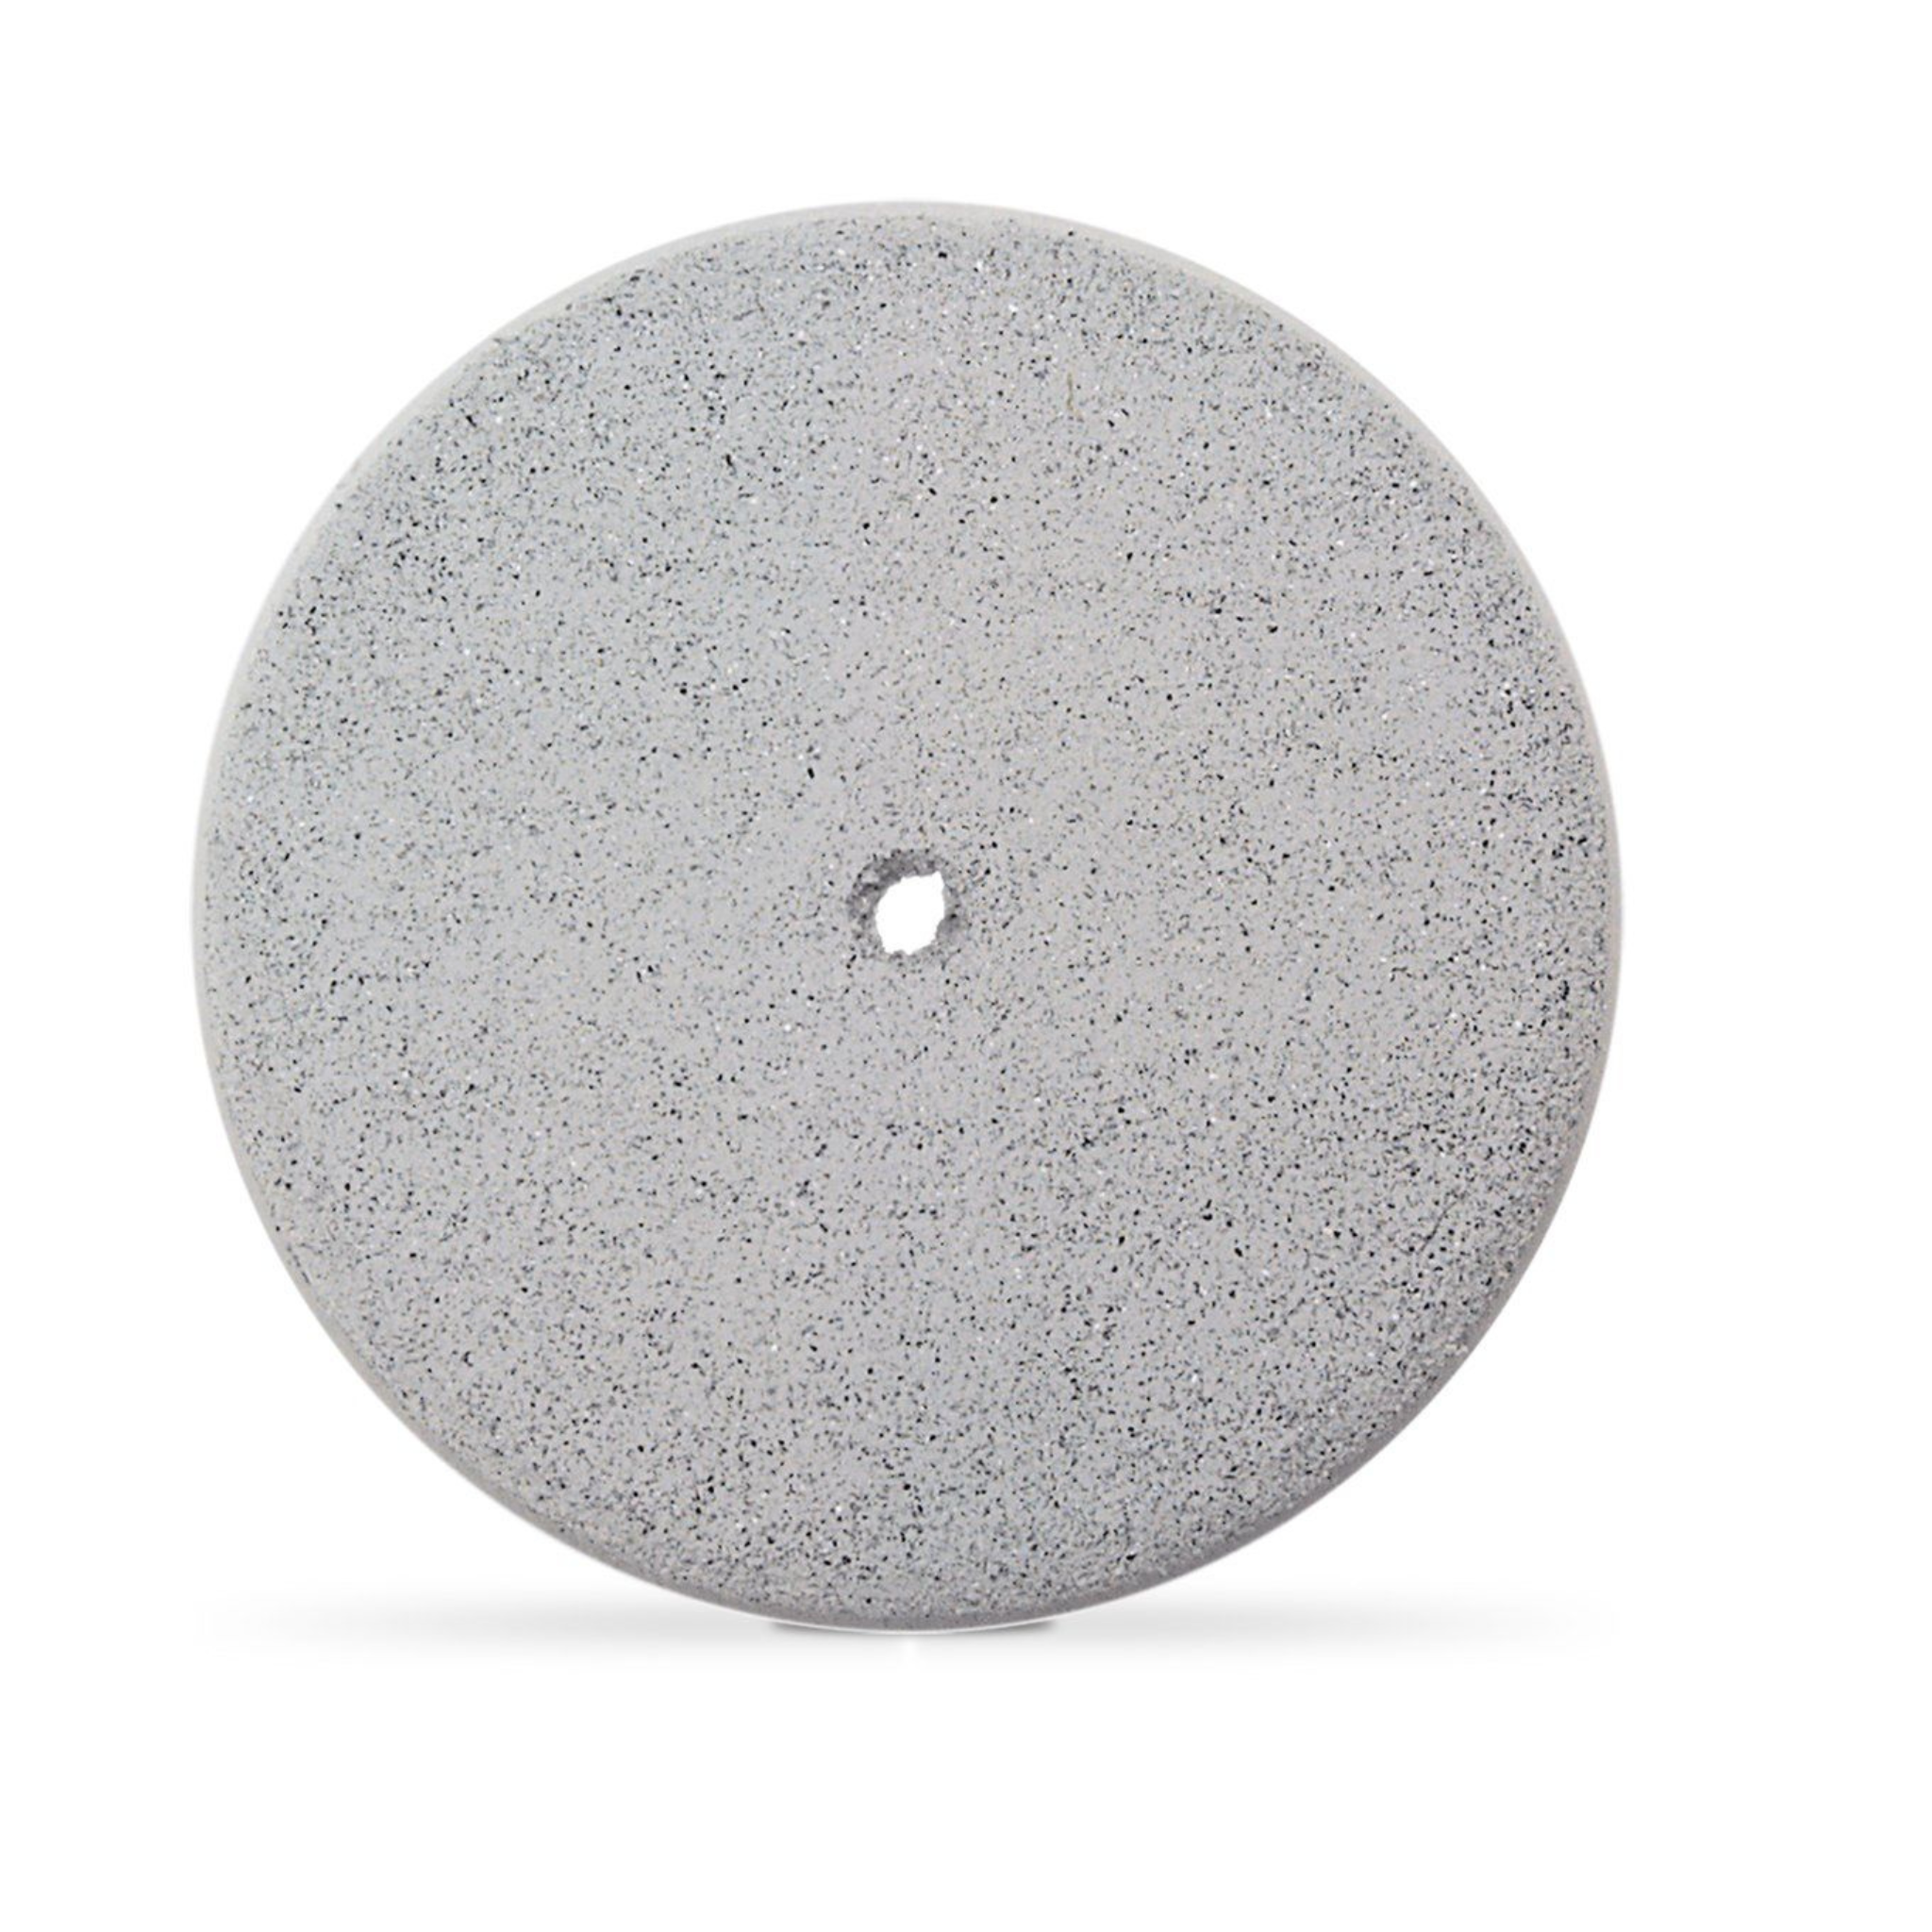 Polishing wheel ceramic & metal 22 x 3.2 mm